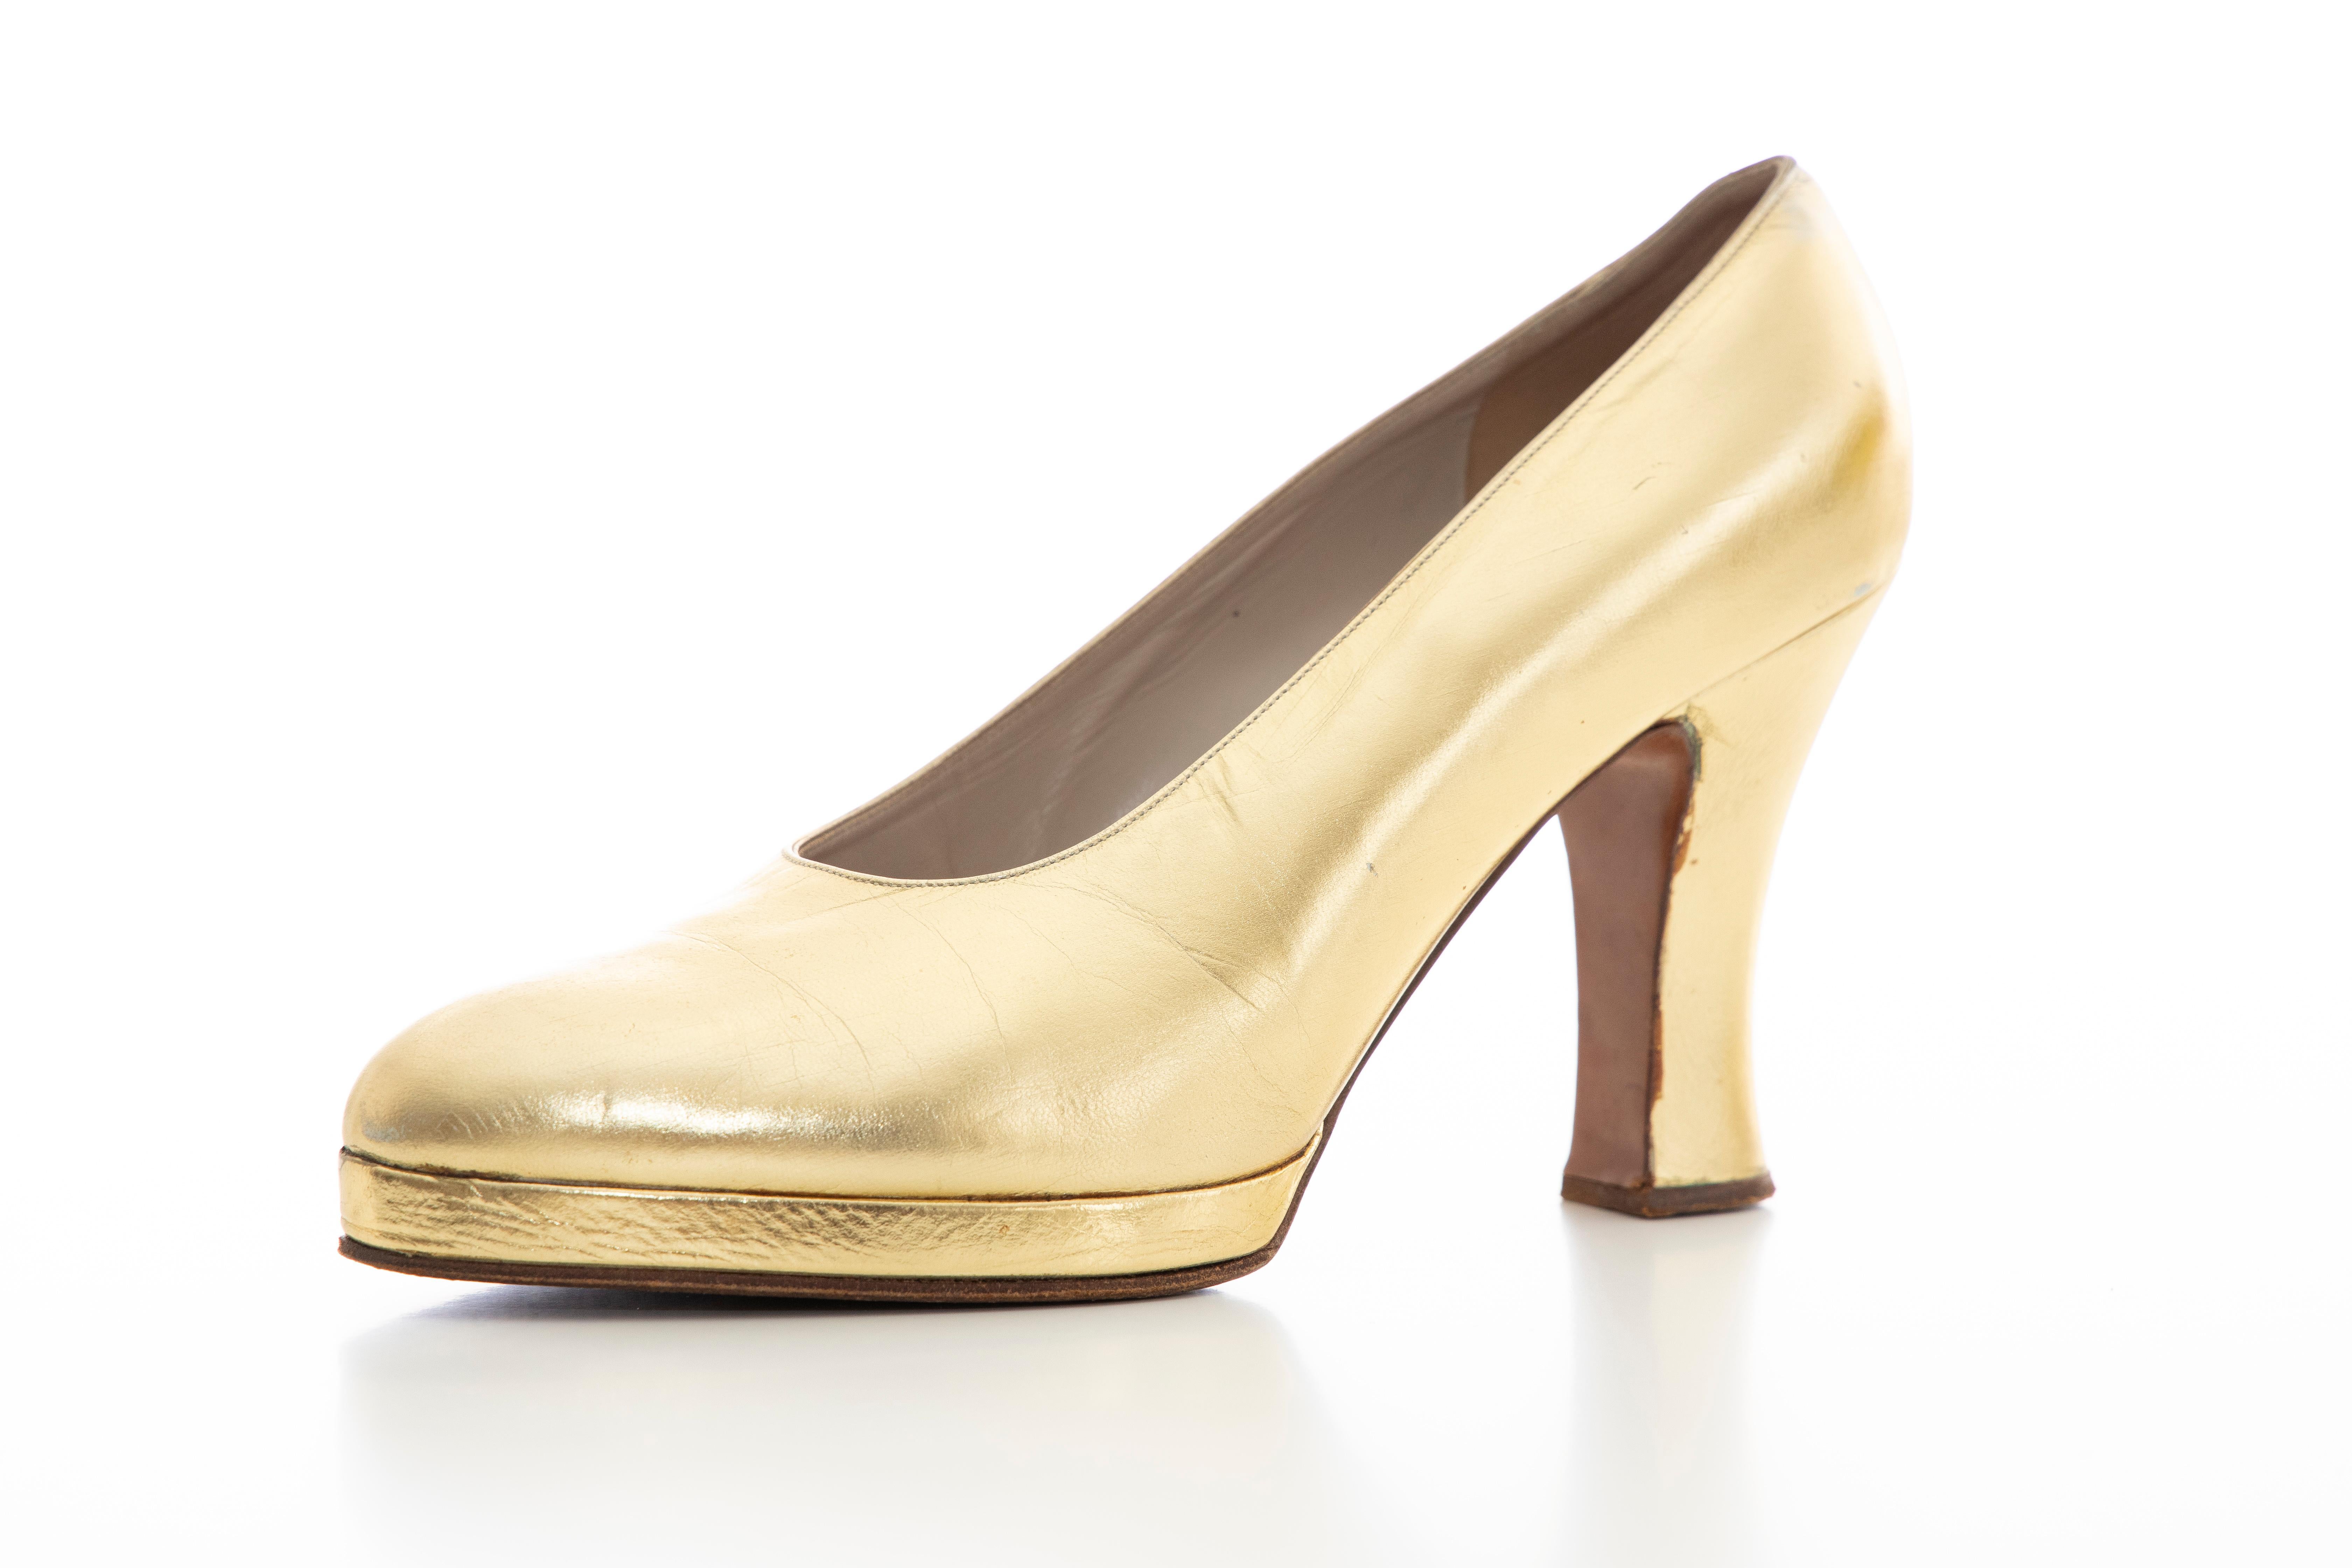 Chanel, Fall 1996 metallic gold leather pumps.

Heel: 3.5

EU.39, US. 9

